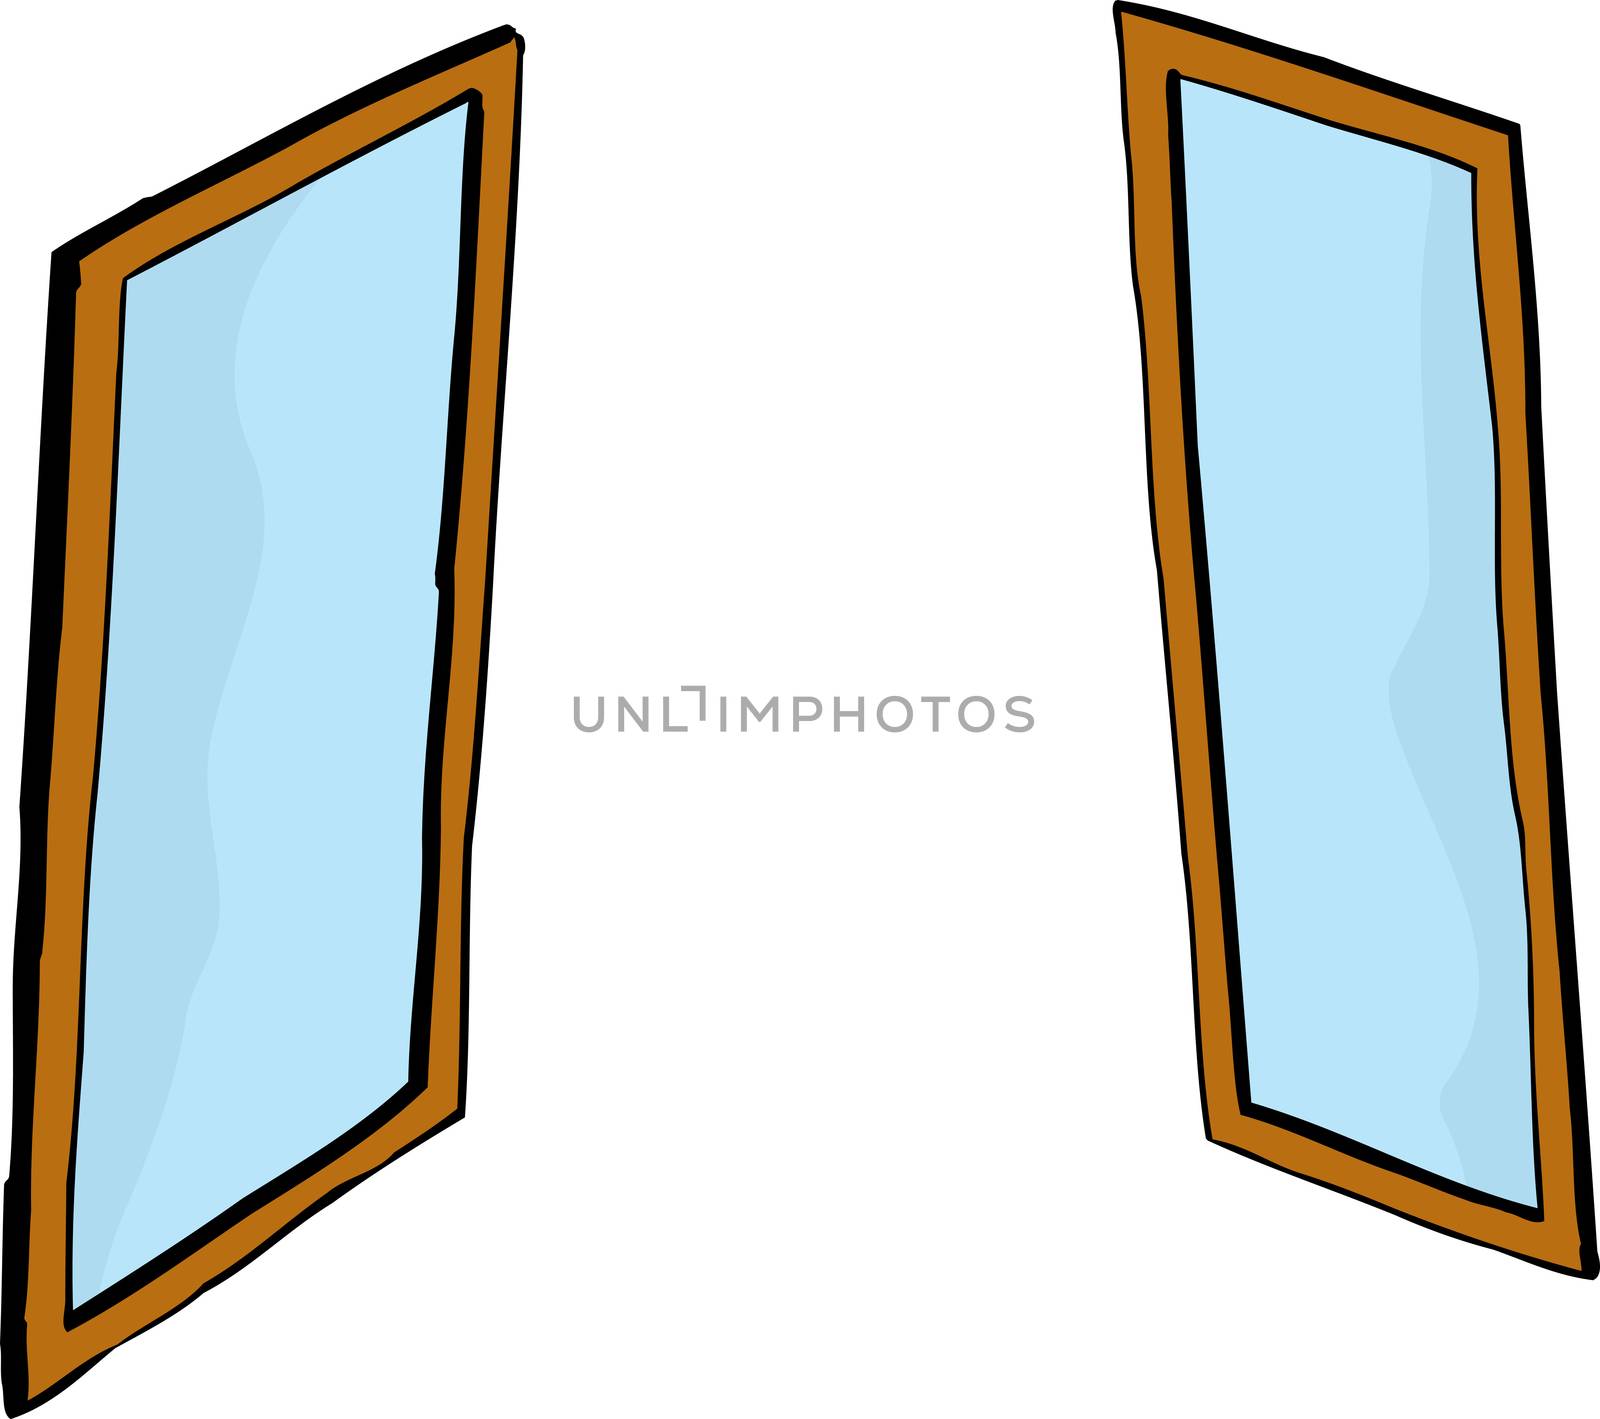 Pair of window or mirror cartoons by TheBlackRhino